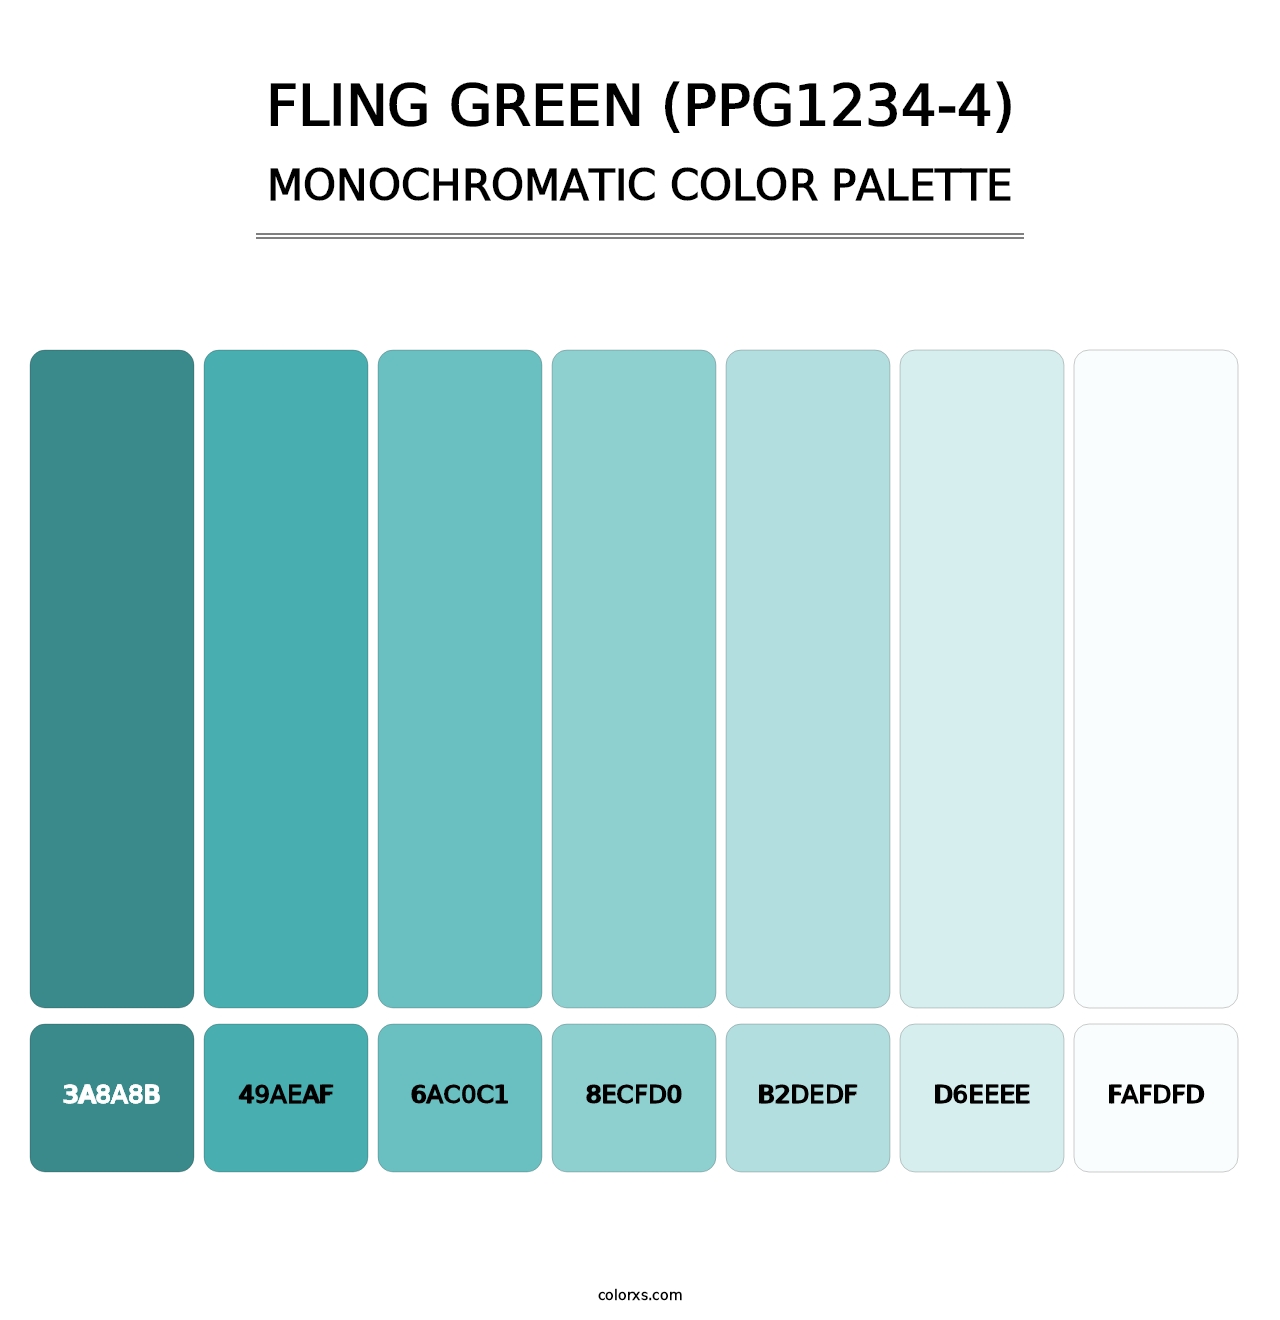 Fling Green (PPG1234-4) - Monochromatic Color Palette